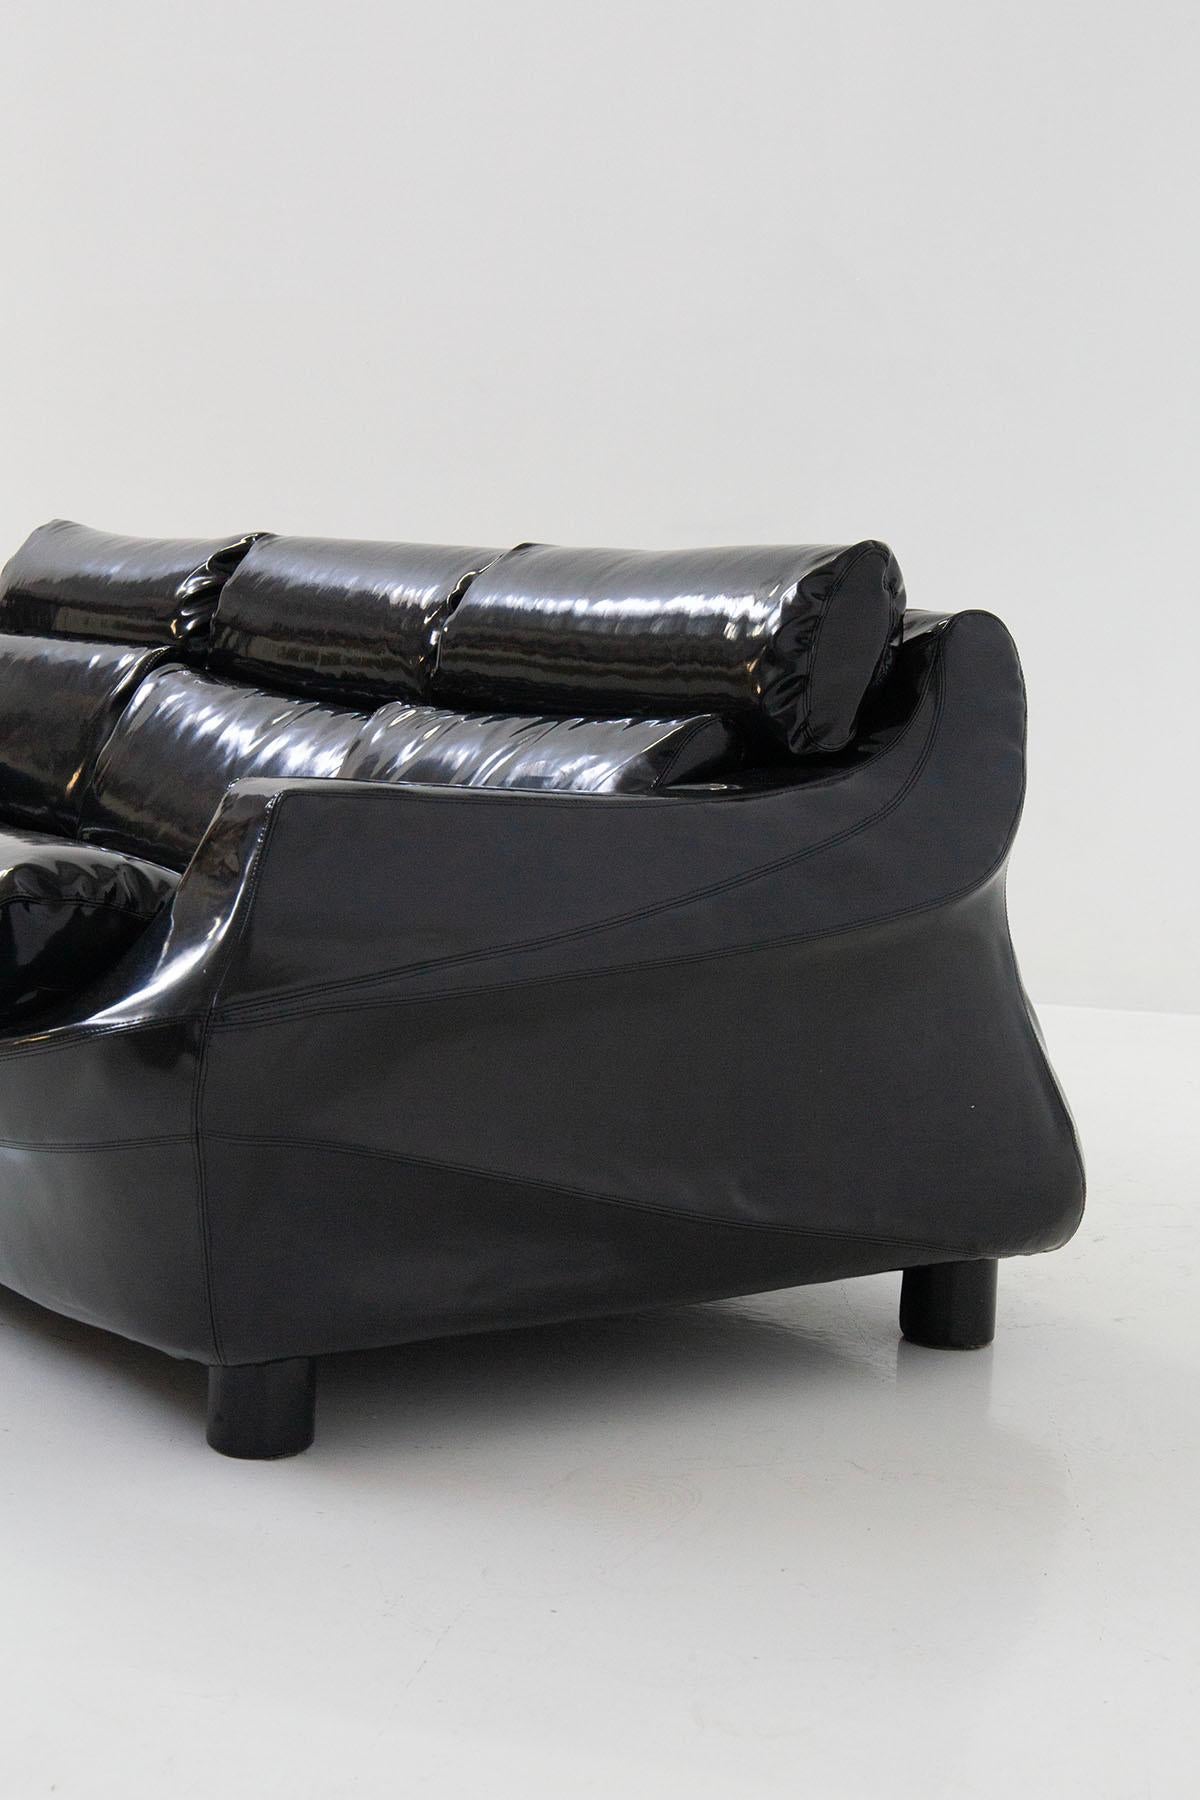 Wood Mid-Century Sofa in black latex by Stasis Salotti